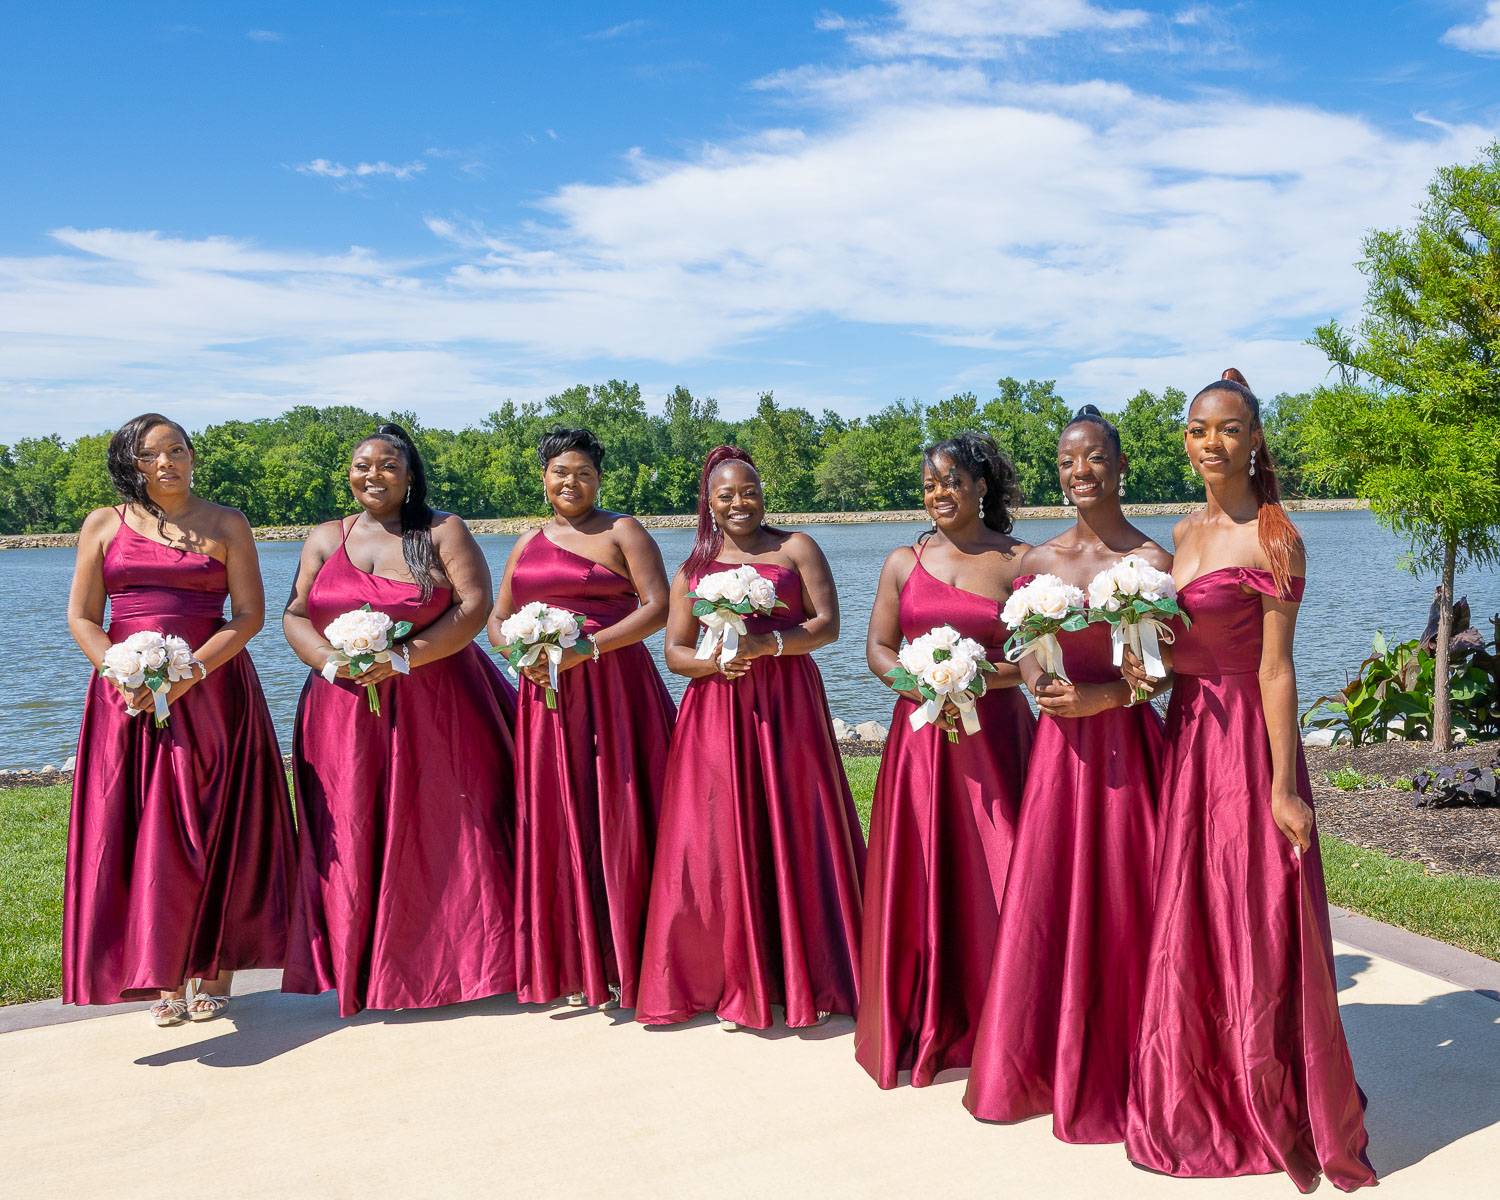 The bride’s attendants wearing magenta dresses